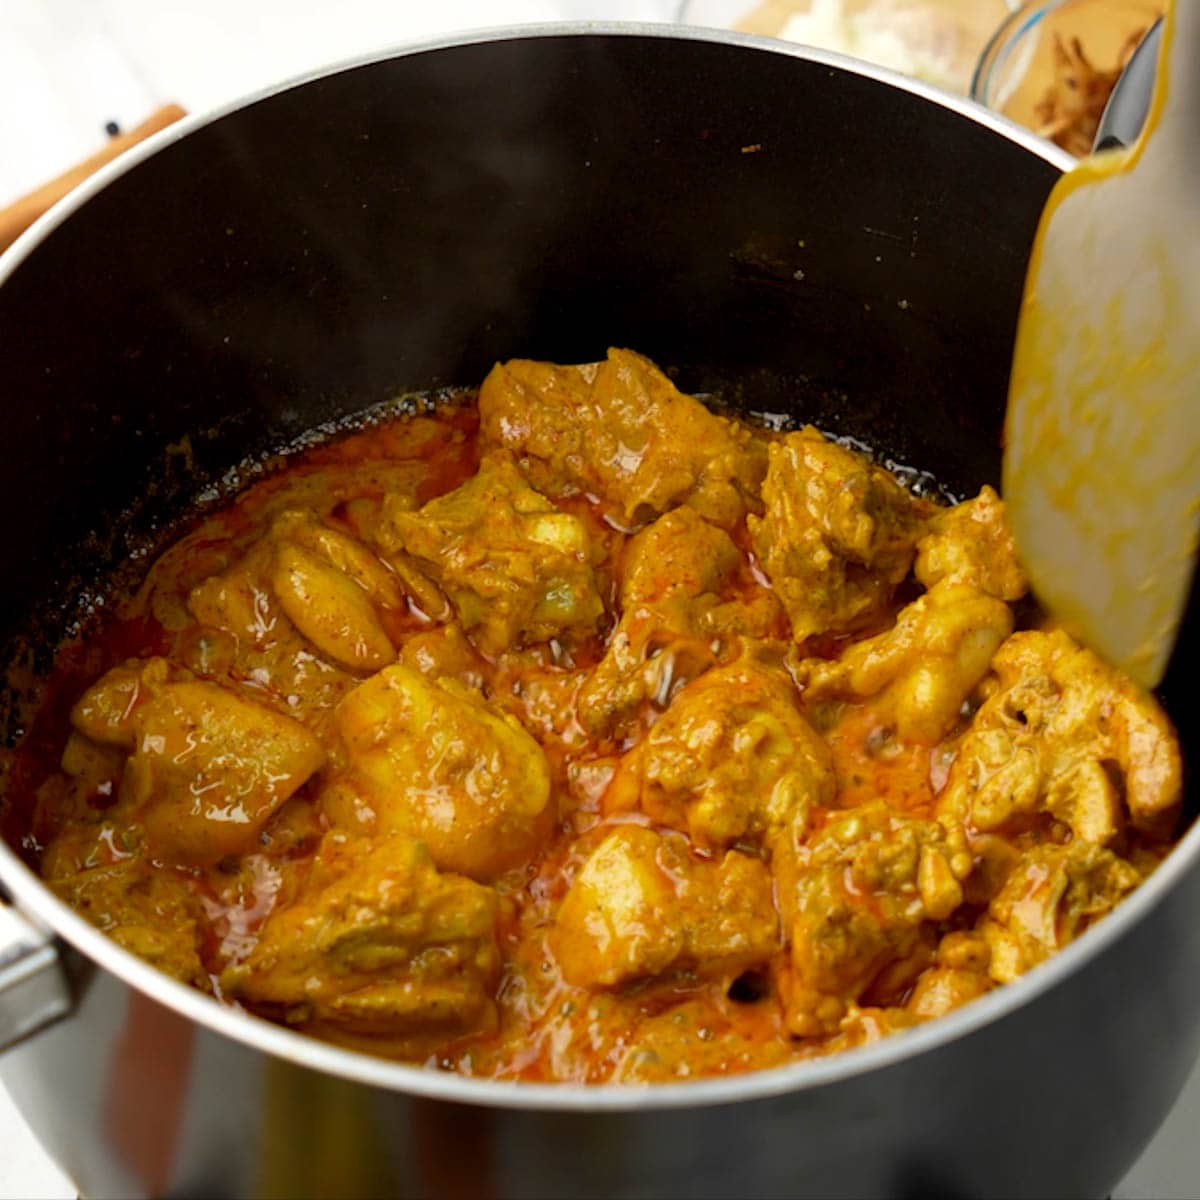 Par cooking chicken to make biryani